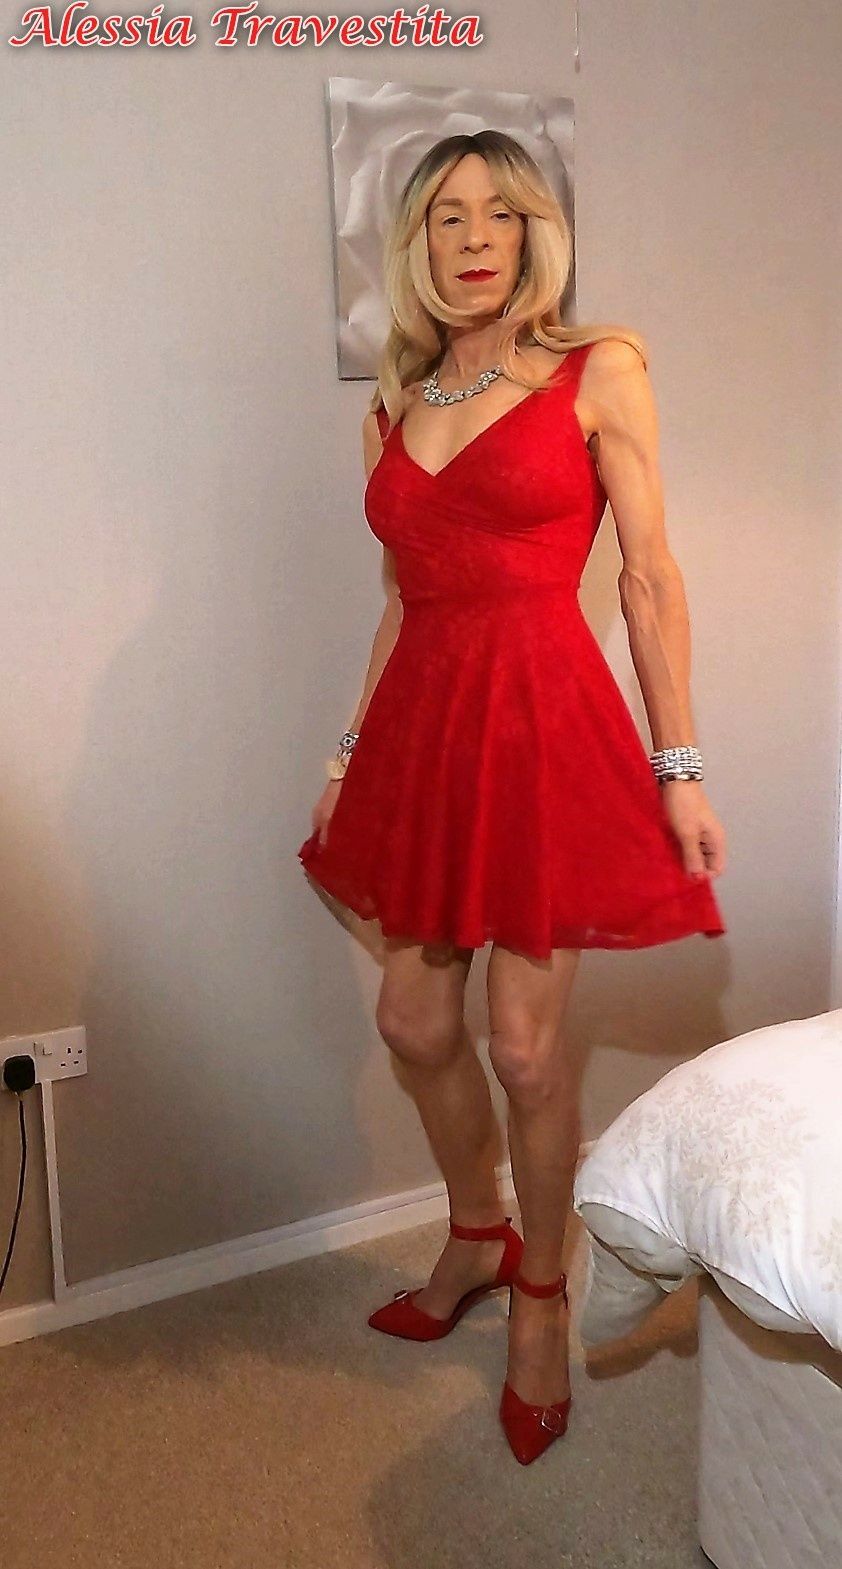 65 Alessia Travestita in Flirty Red Dress #17